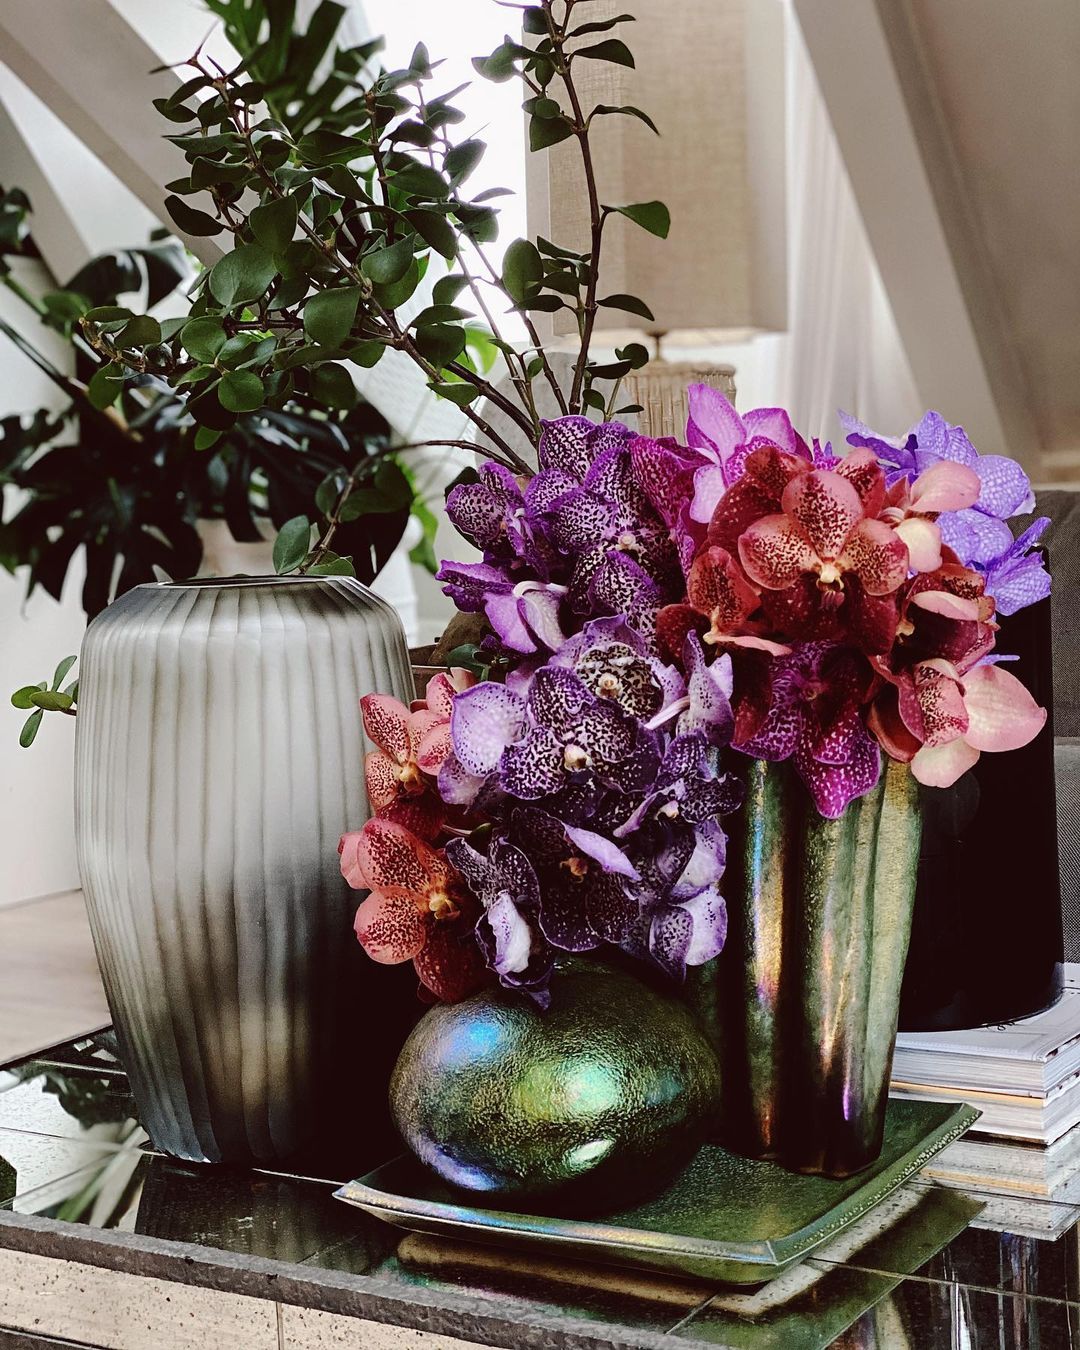 Floral design with Vanda orchids - Ansu Vanda on Thursd